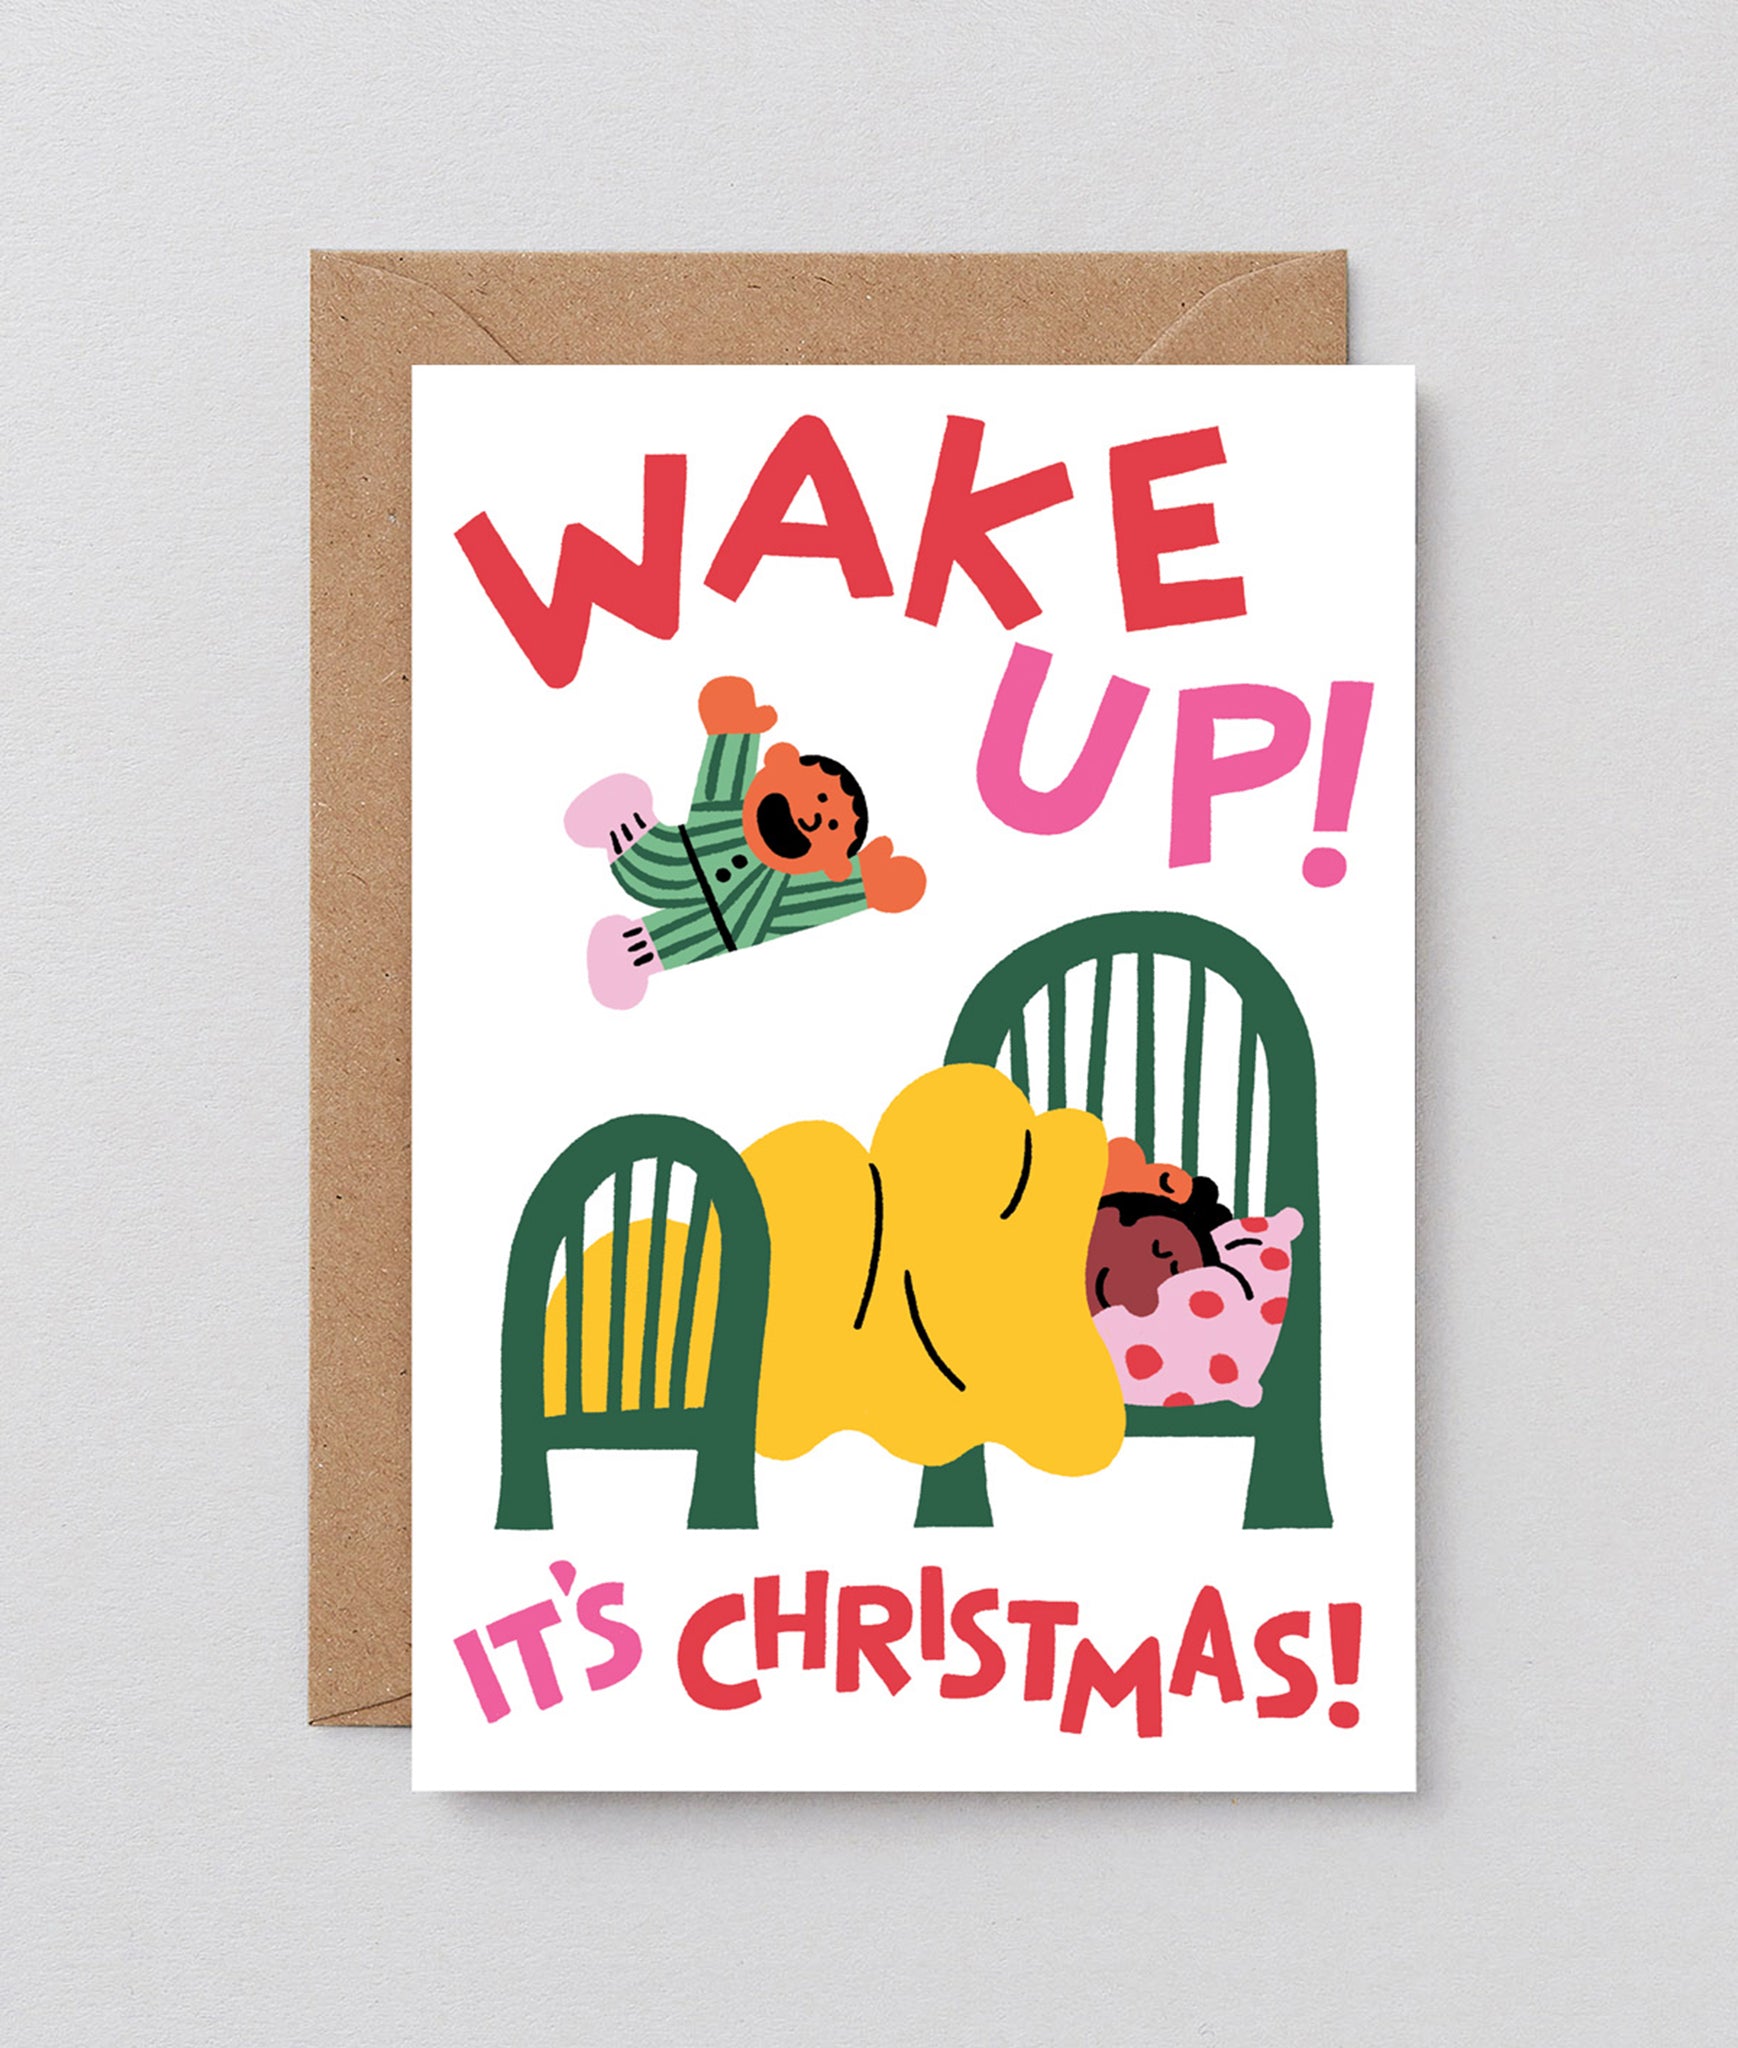 Wake up it's Christmas card